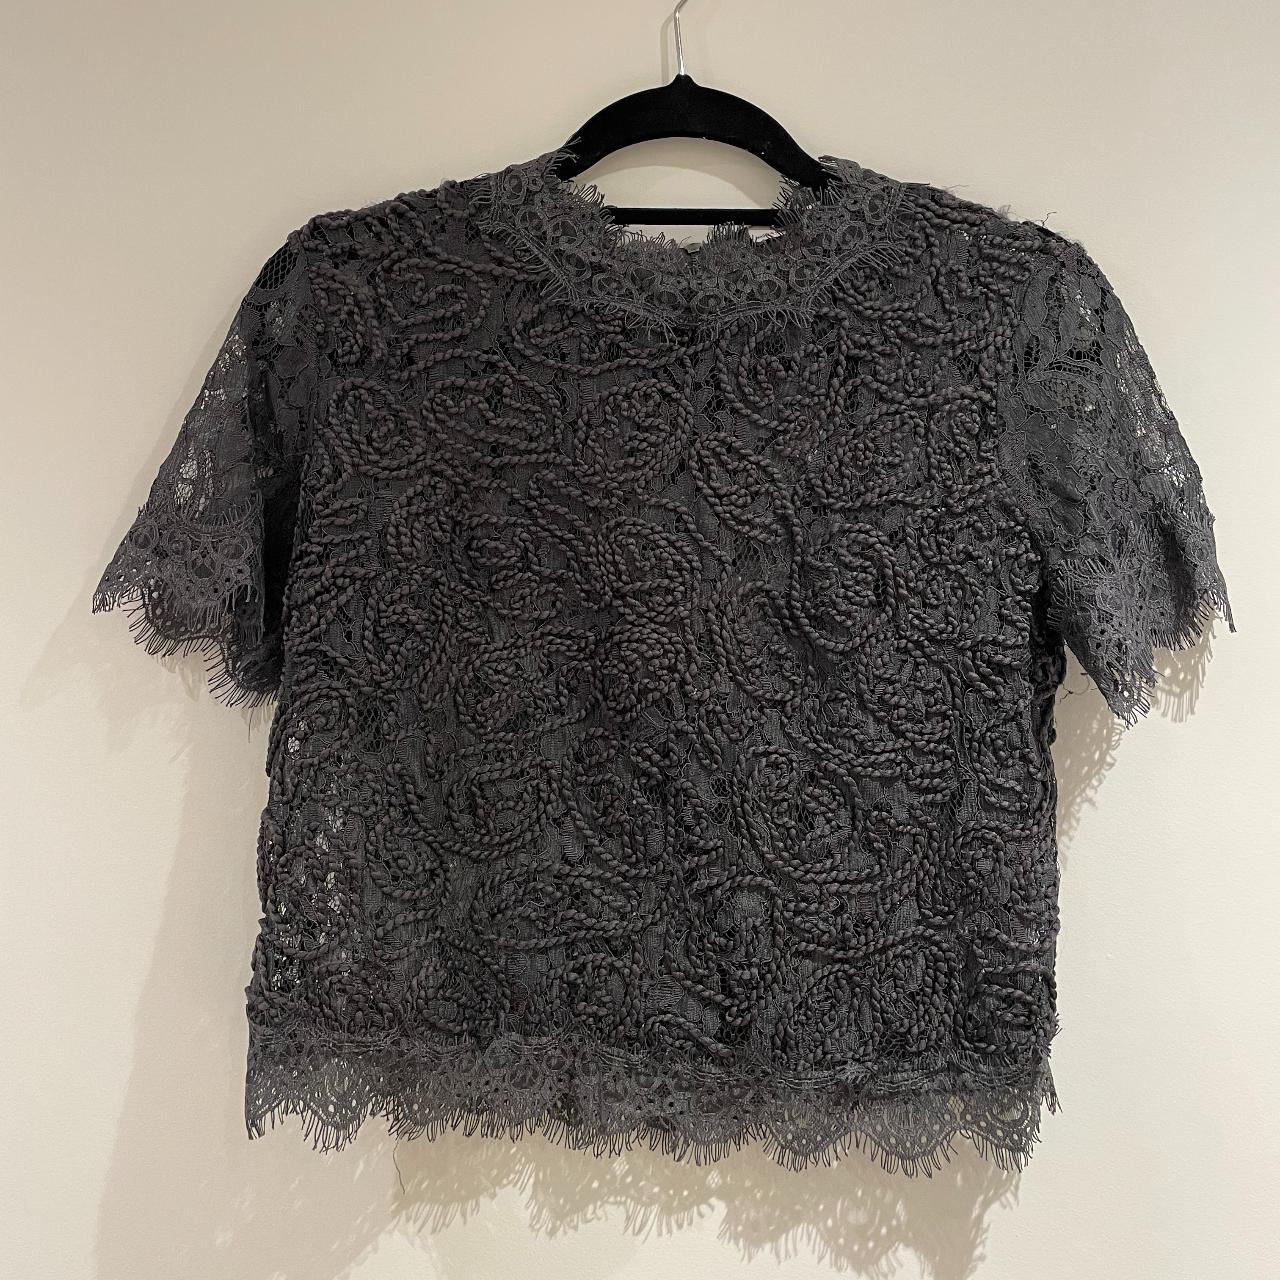 Product Image 1 - Grey Lace Shirt 

Size: M